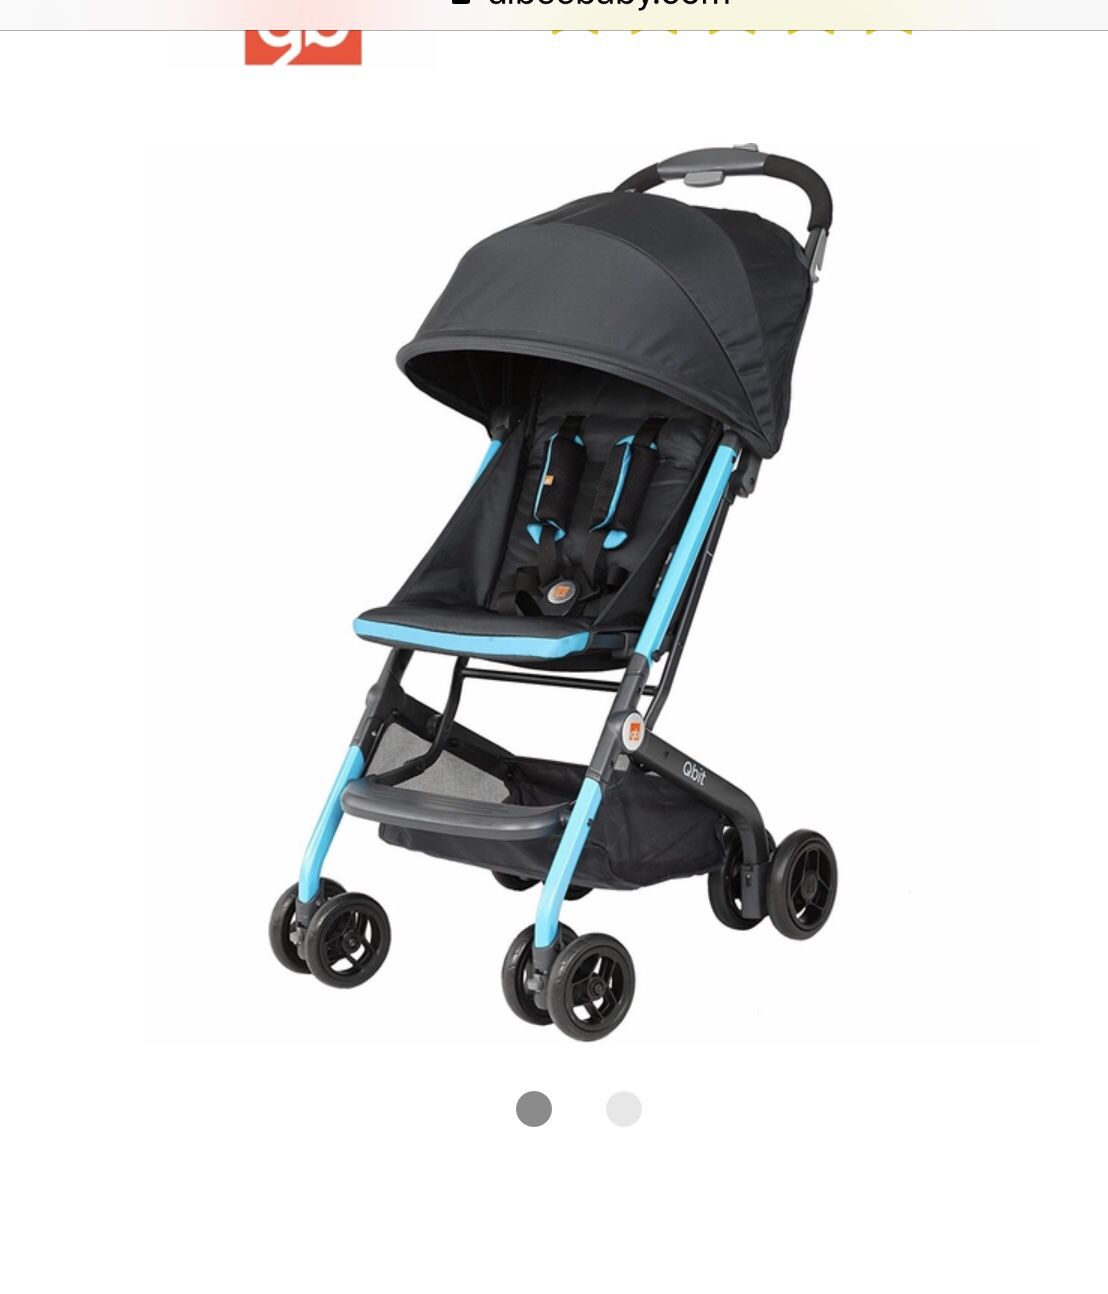 New baby bundle- stroller, dockatot and carrier